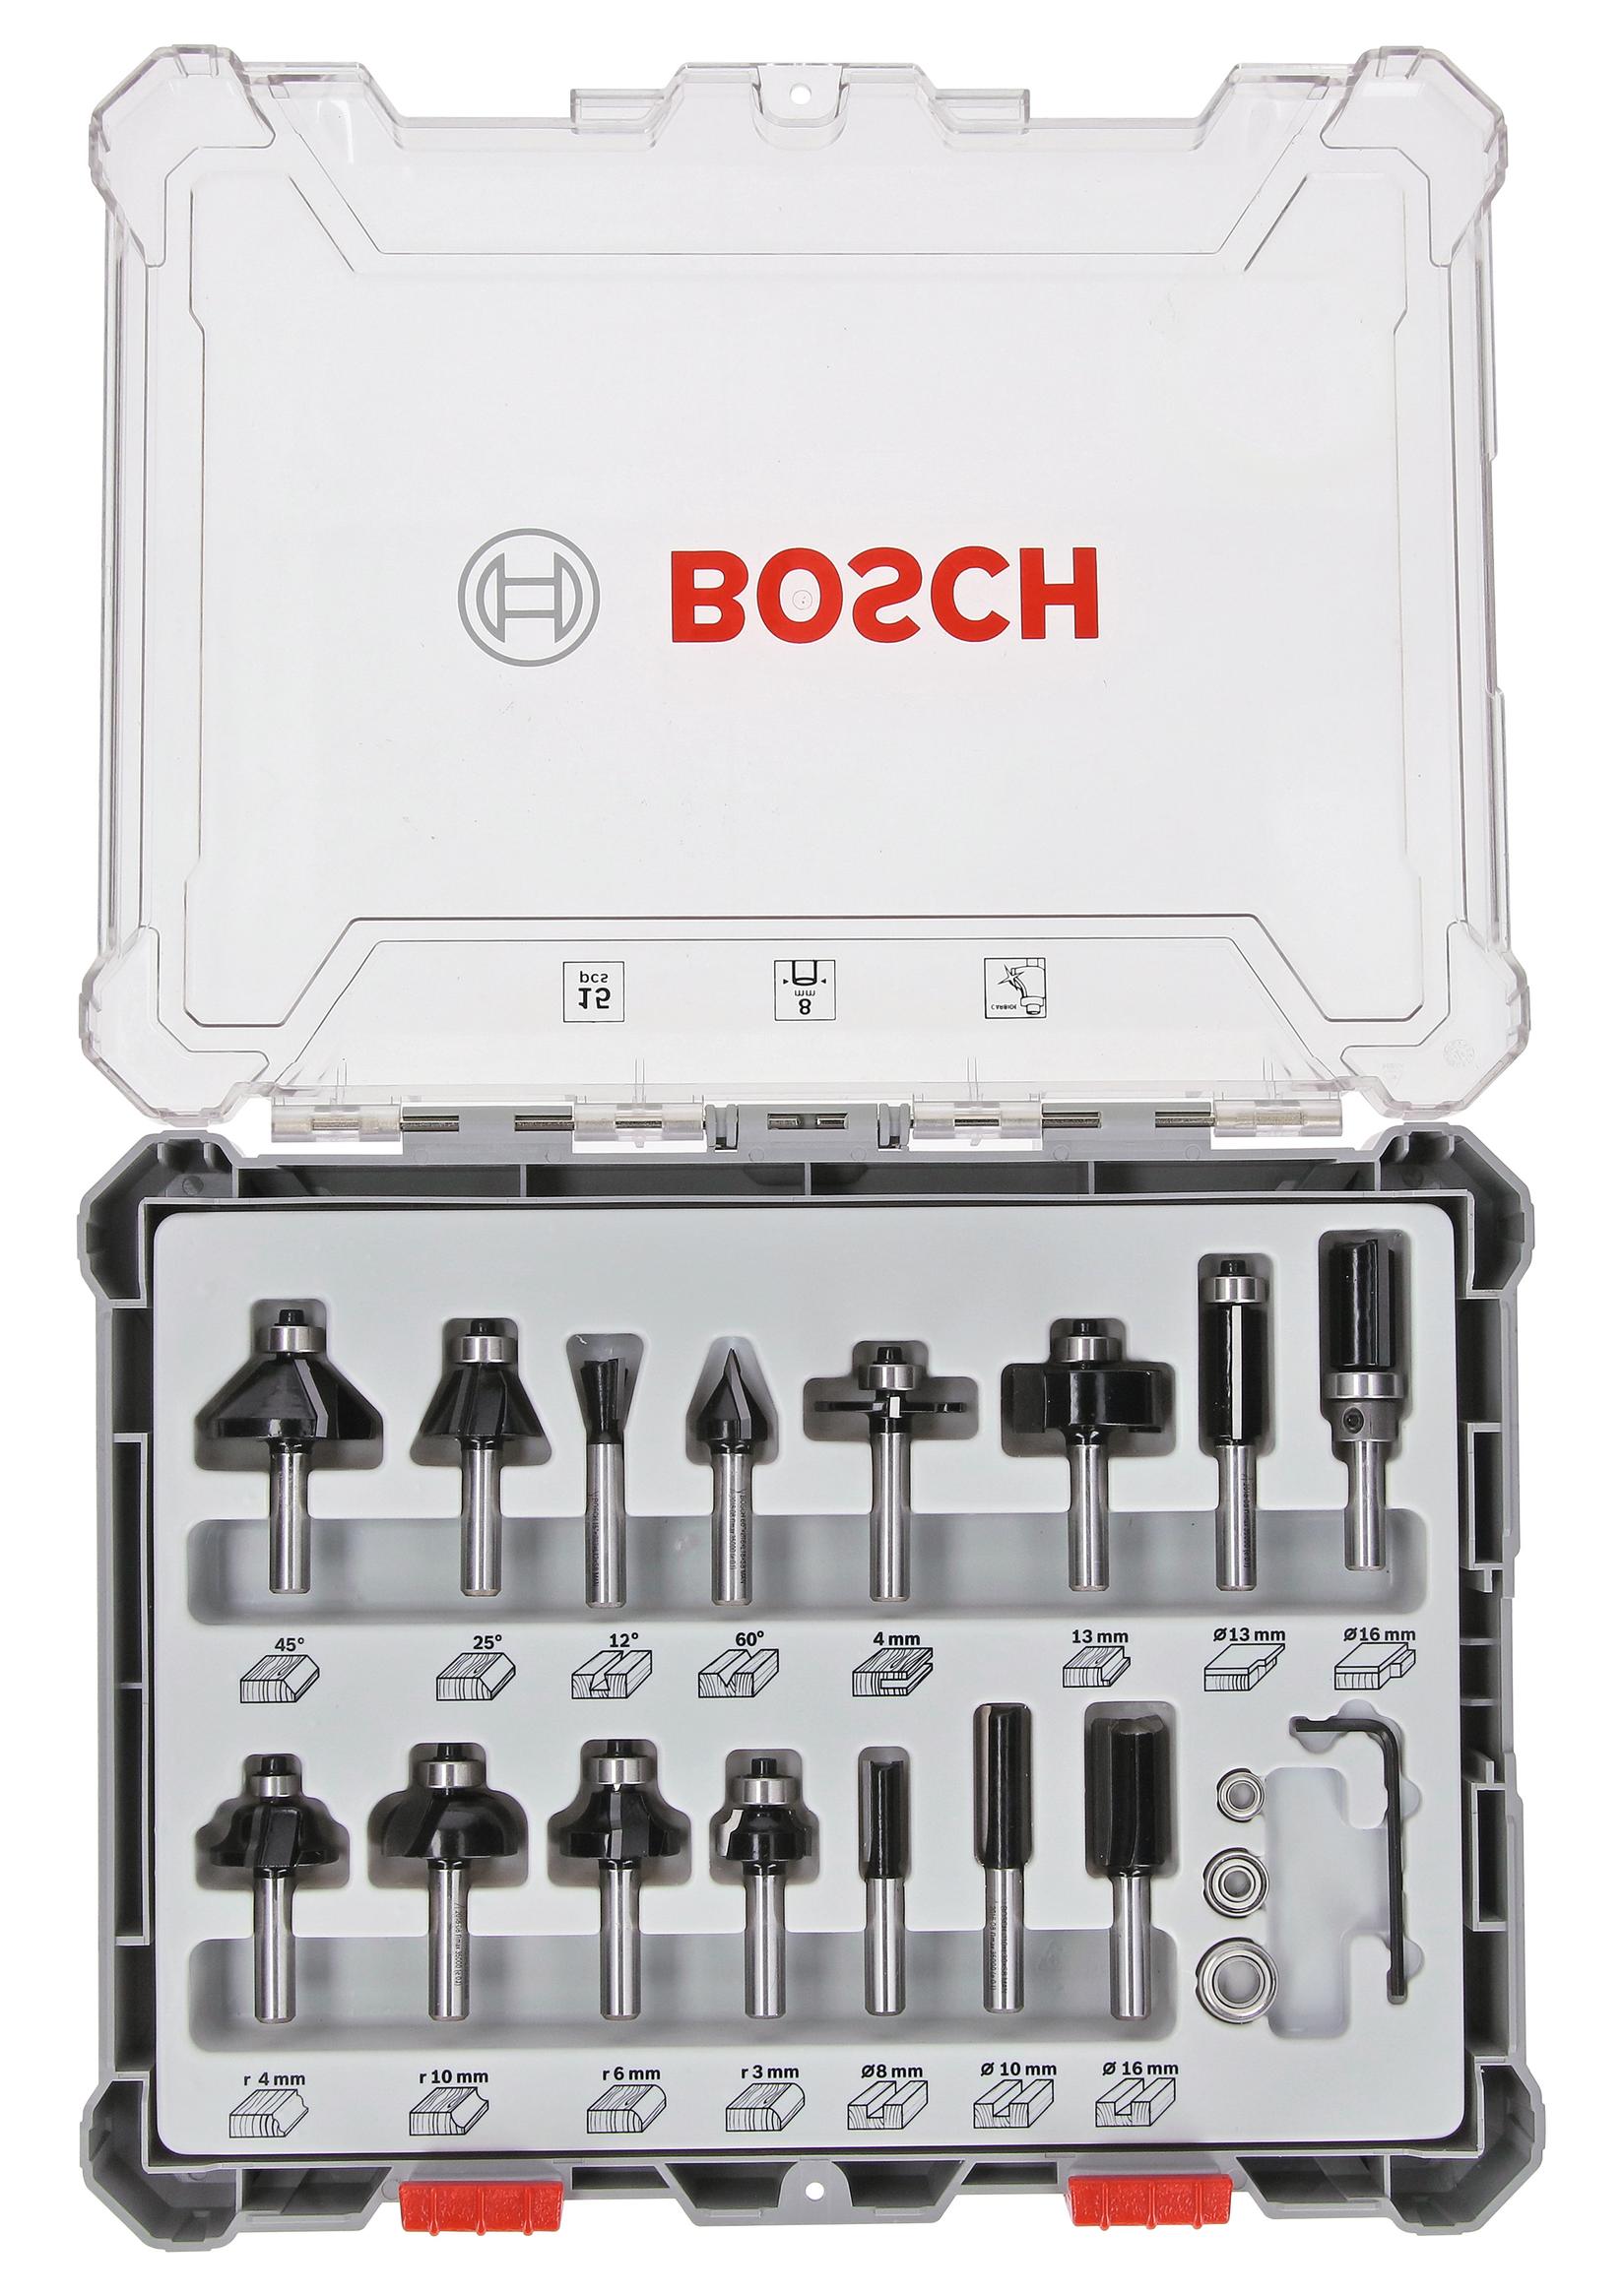 Selected image for Bosch Komplet raznih glodala, 15 komada, držač od 8 mm 2607017472, 15-piece Mixed Application Router Bit Set.